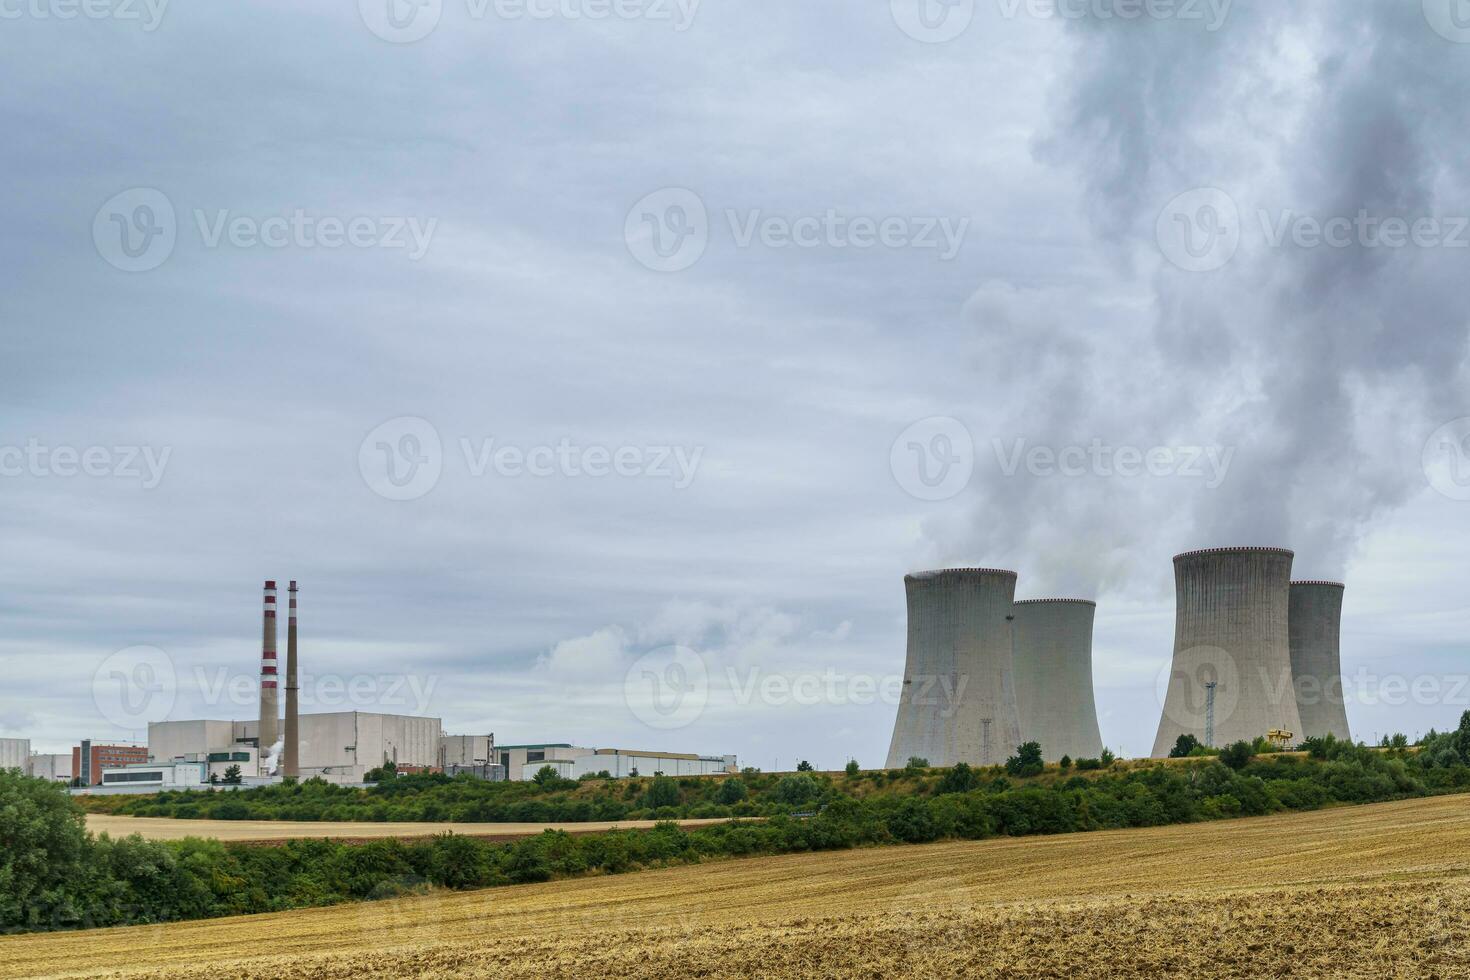 nucleair macht station dukovany, vysocina regio, Tsjechisch republiek, Europa. foto